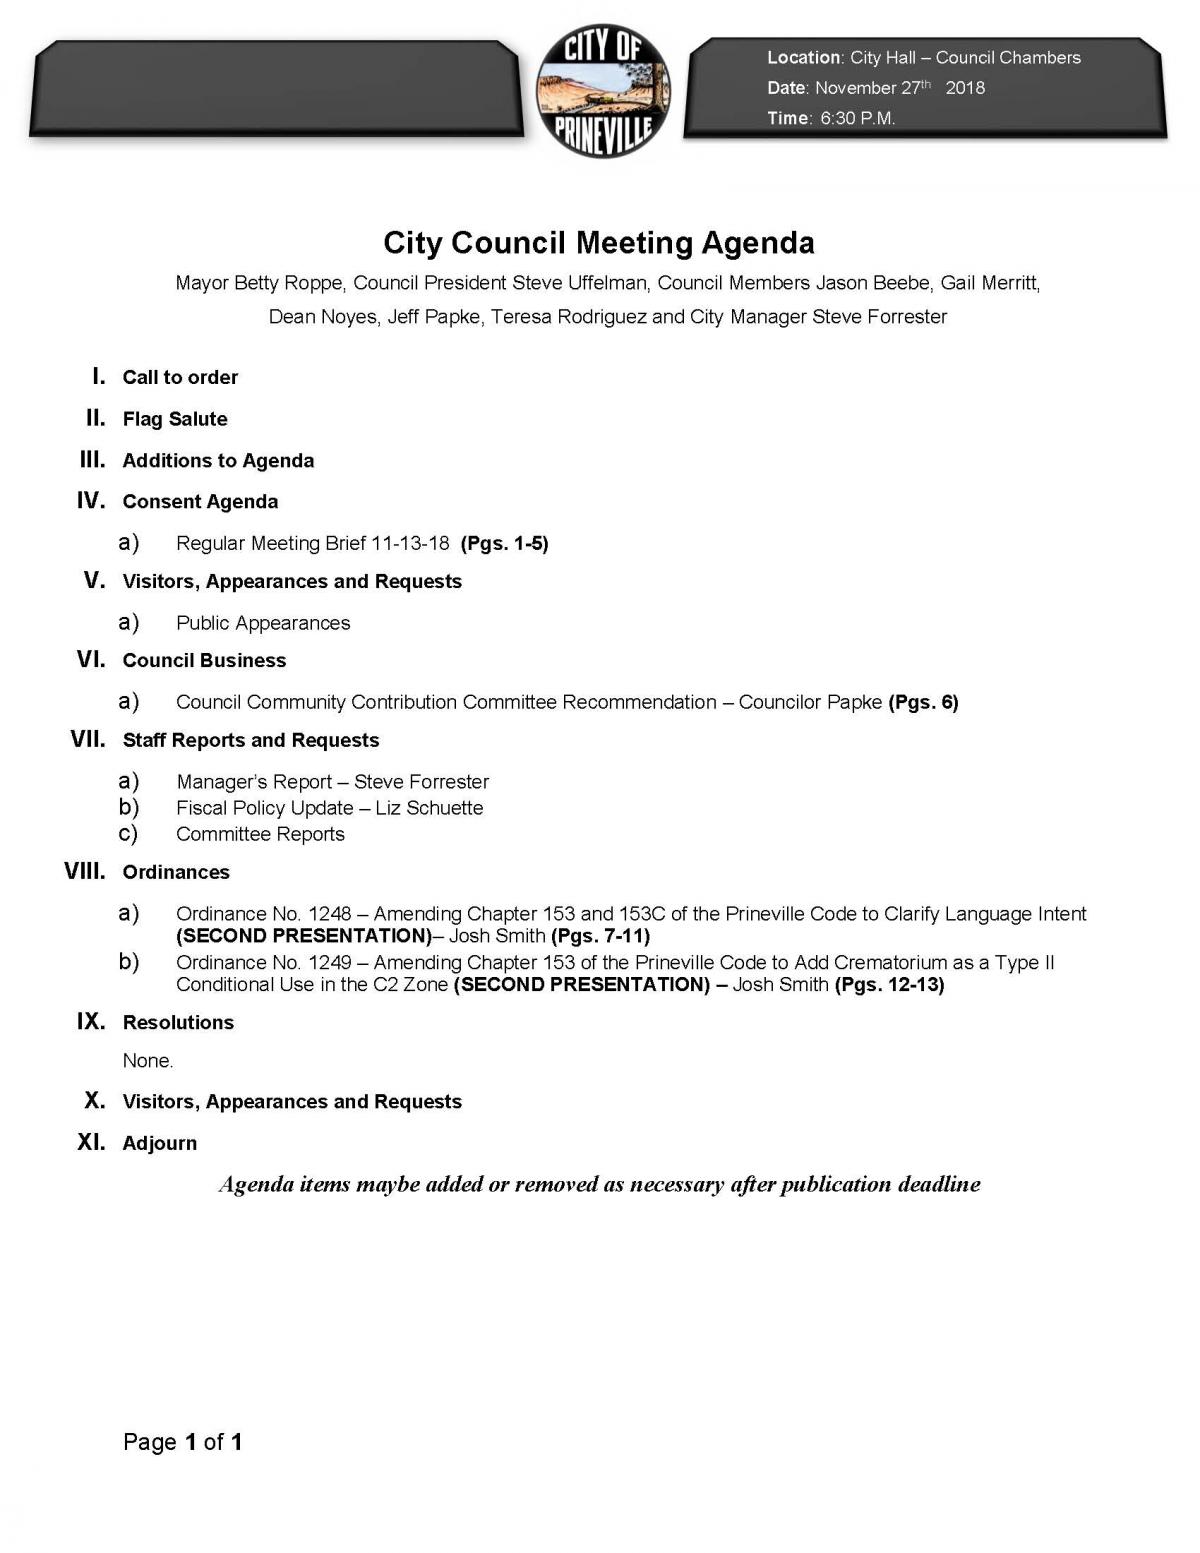 Council Agenda 11-27-18